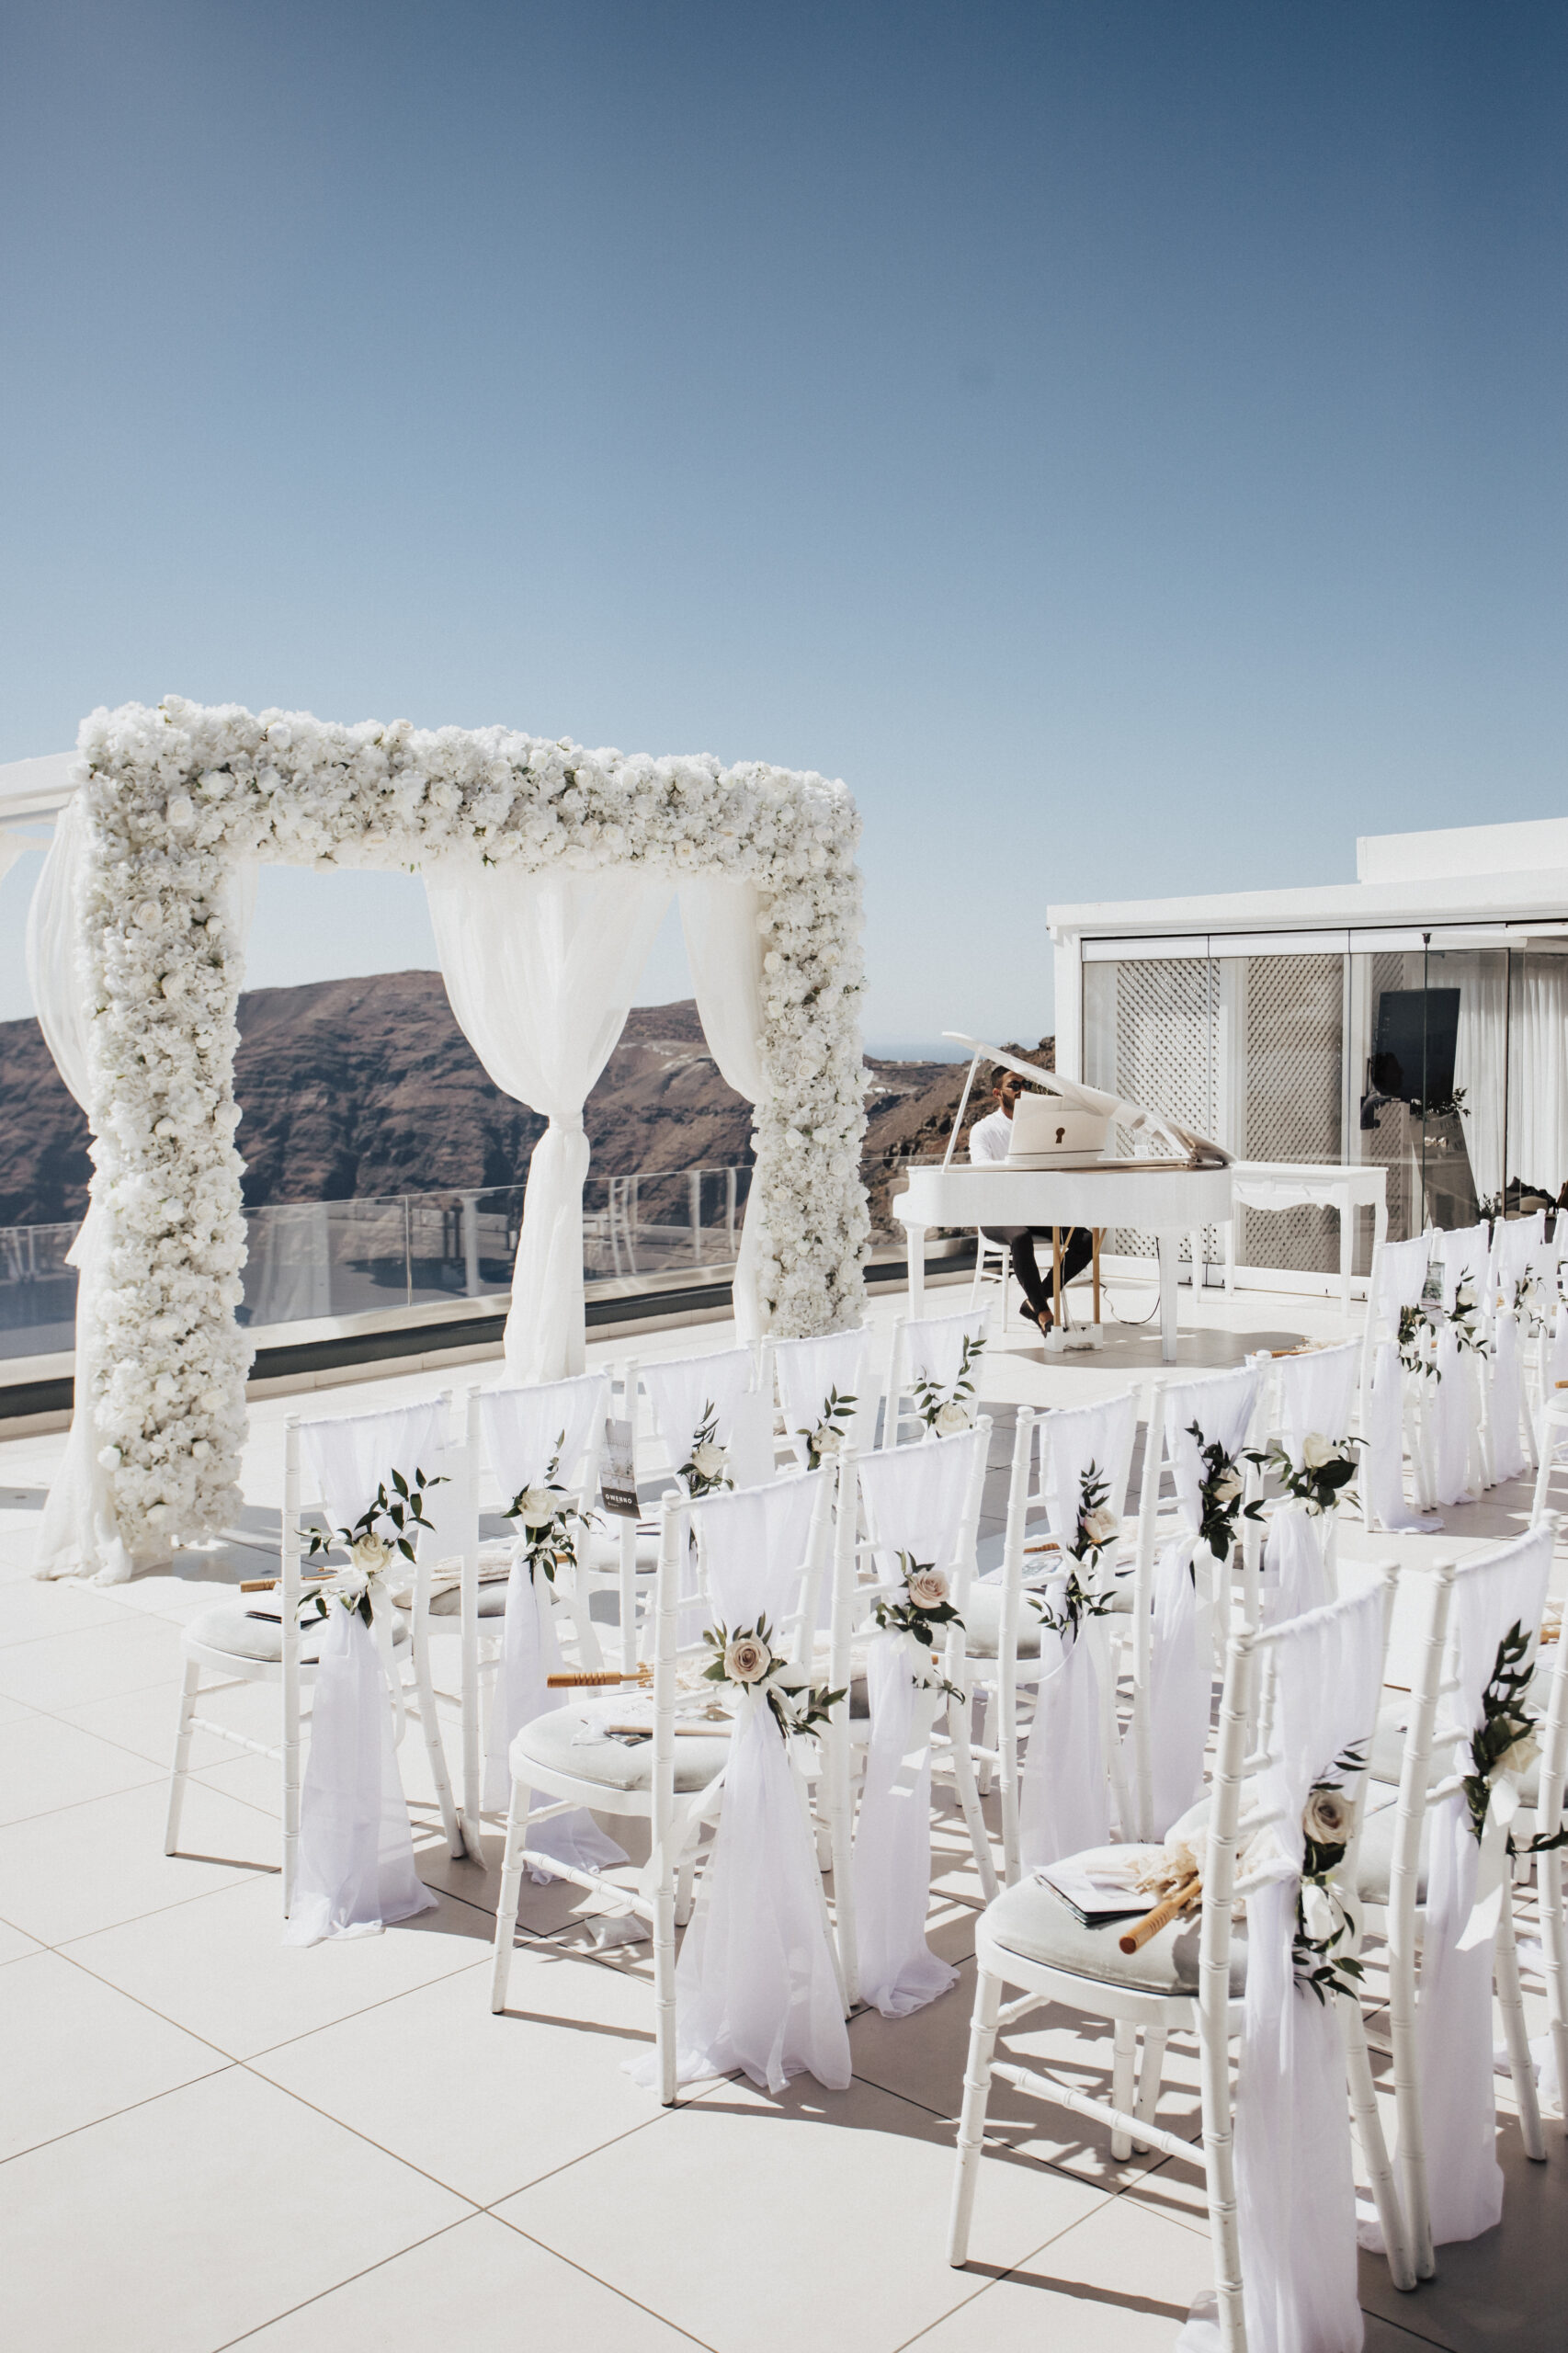 Le Ciel set up for outdoor wedding ceremony